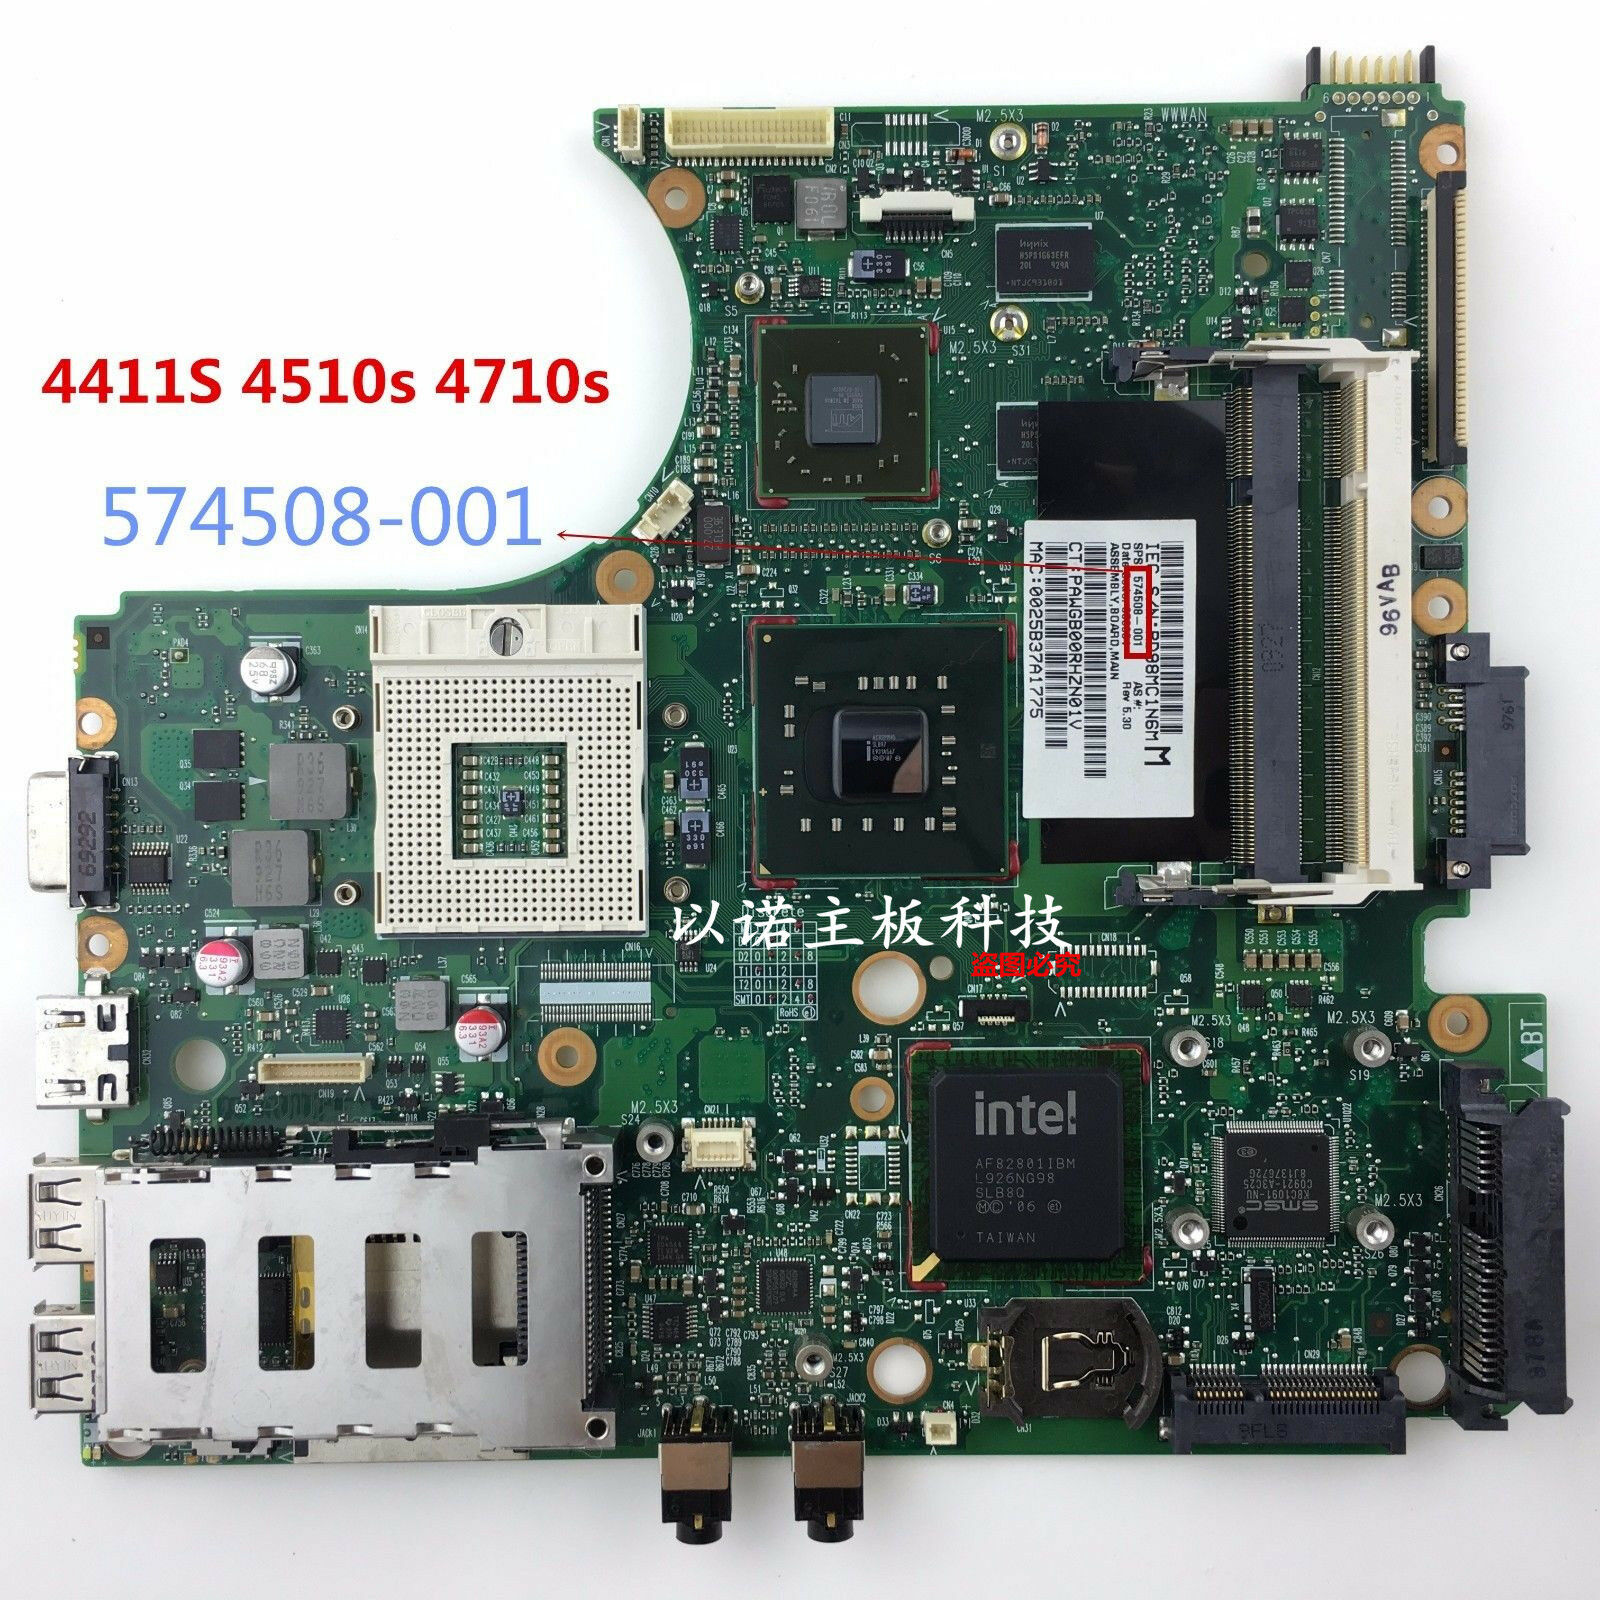 574508-001 for HP PROBOOK 4411S 4510S 4710S motherboard,ATI Graphics,DDR2,GradeA Brand: HP Probook MPN: D